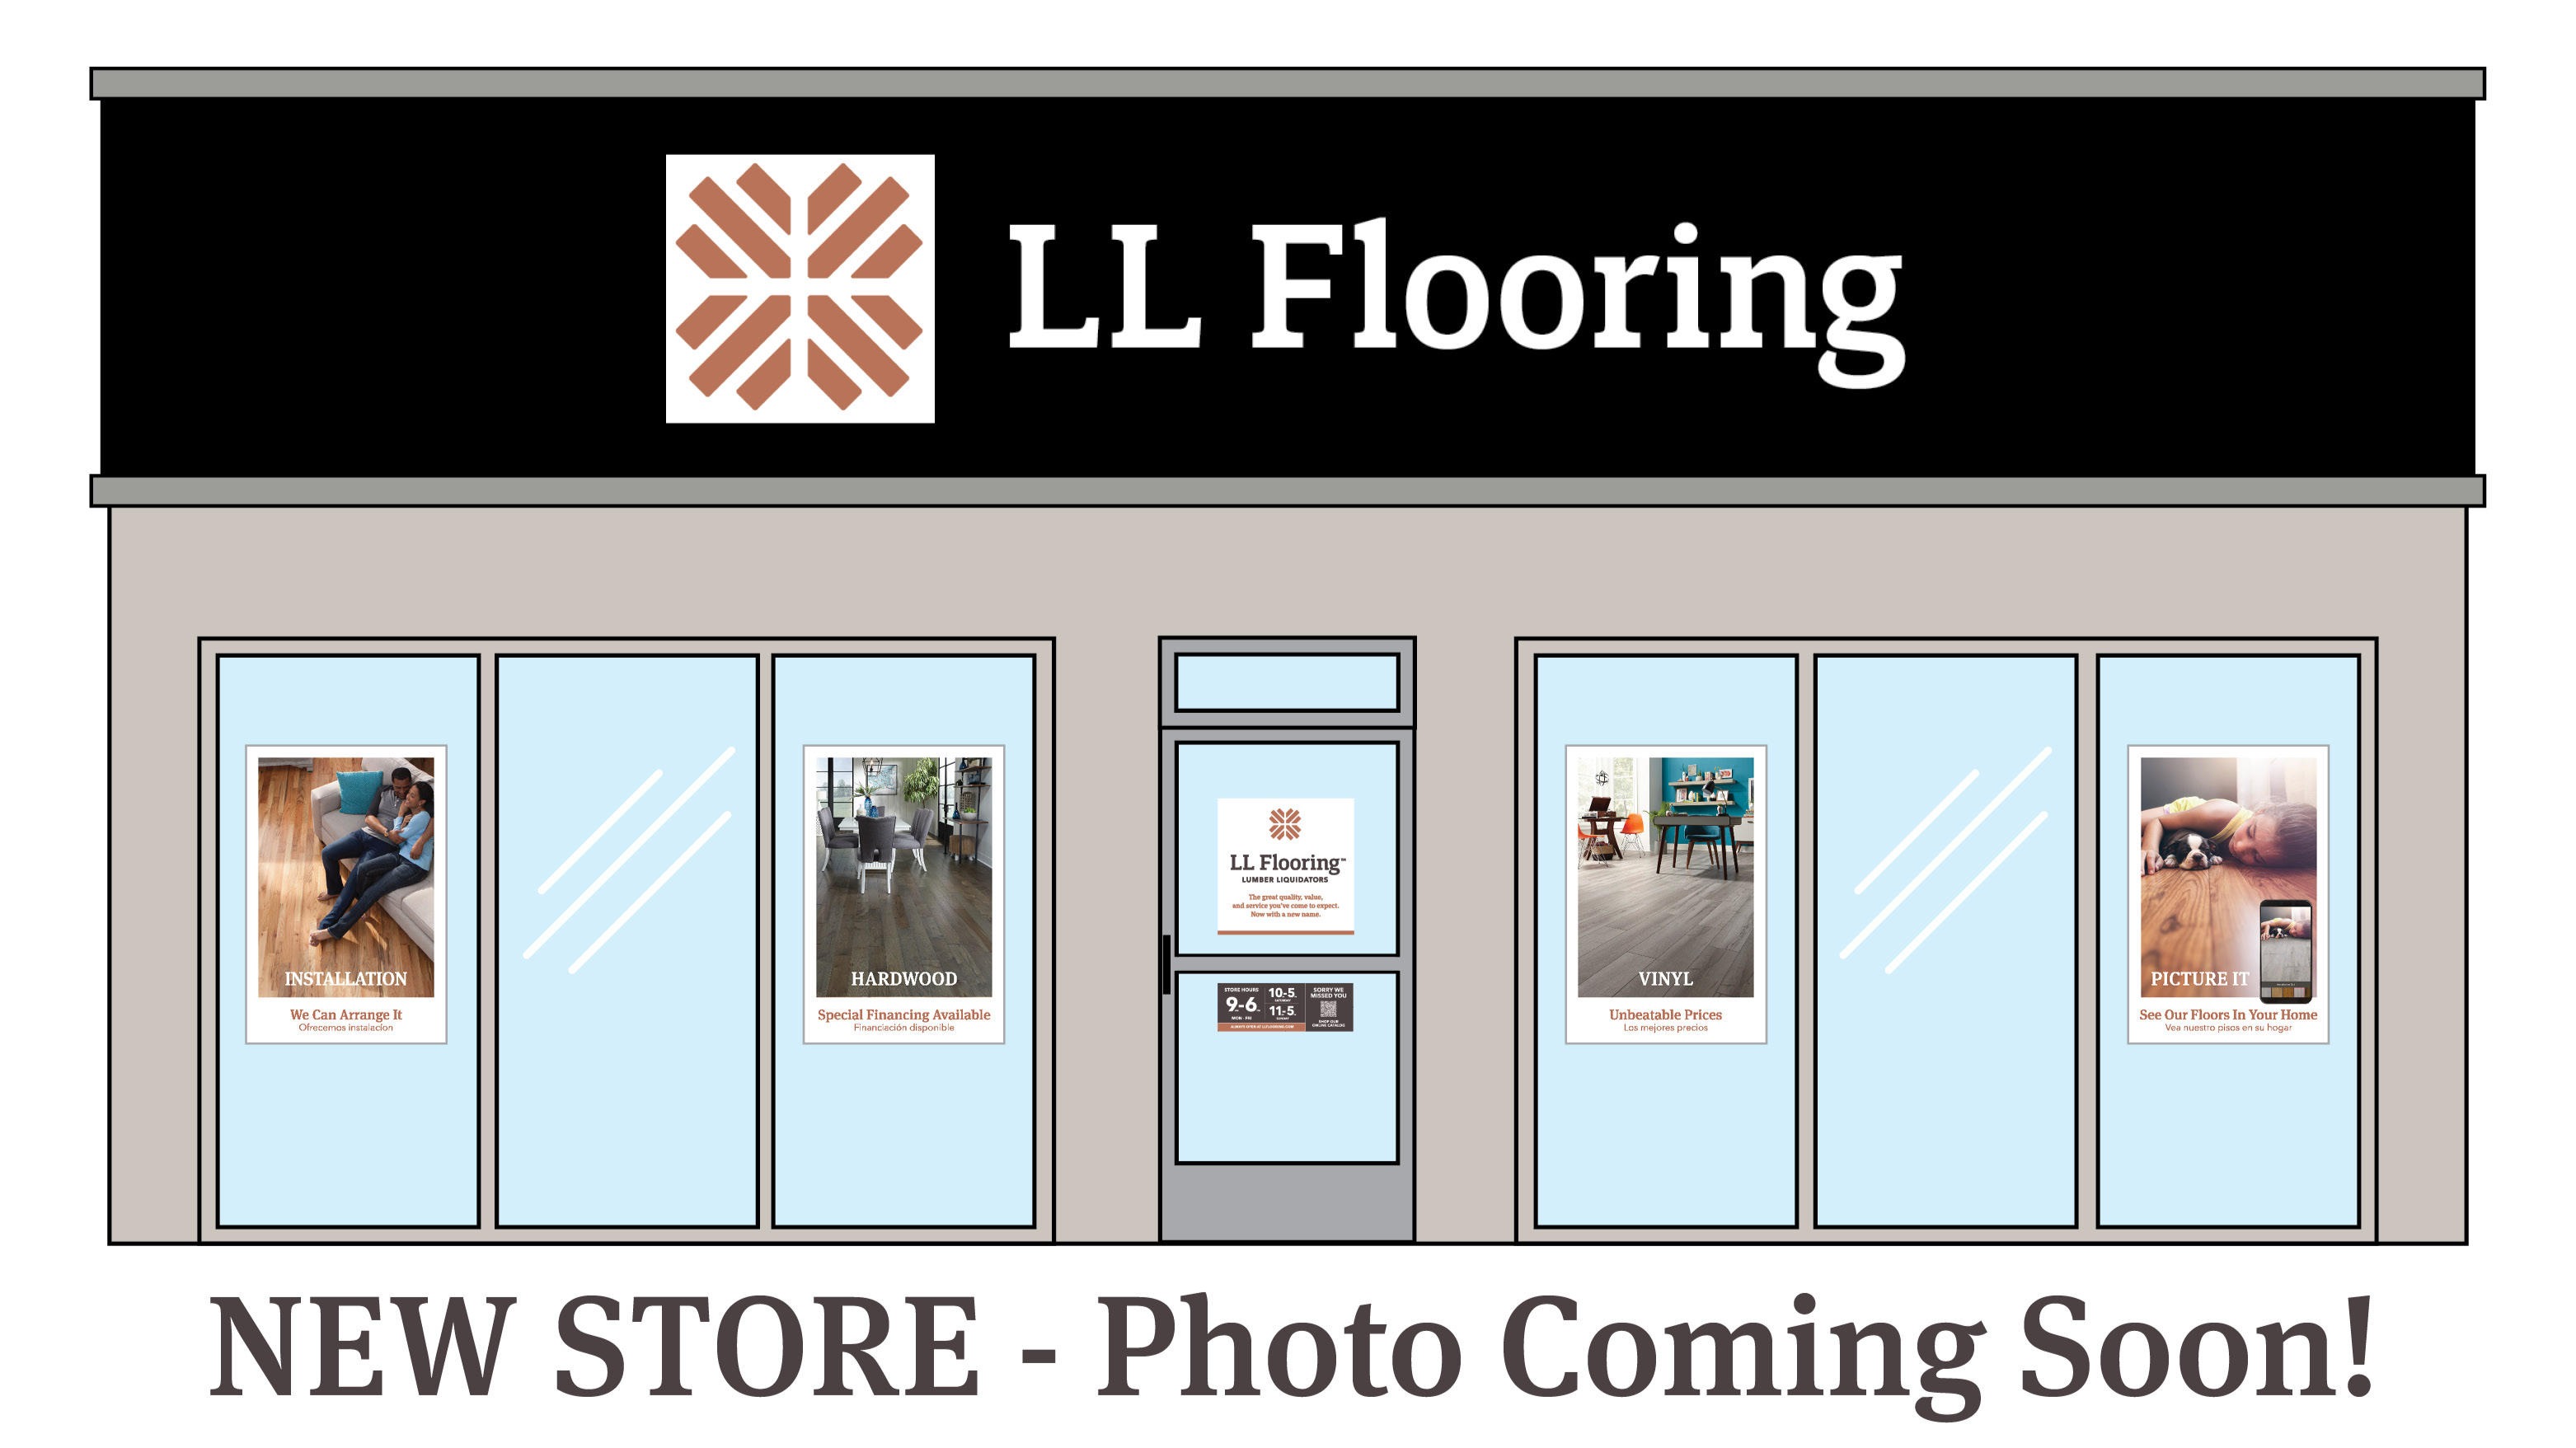 LL Flooring #1460 Prescott Valley | 6689 East 1st Street | Storefront Photo Coming Soon